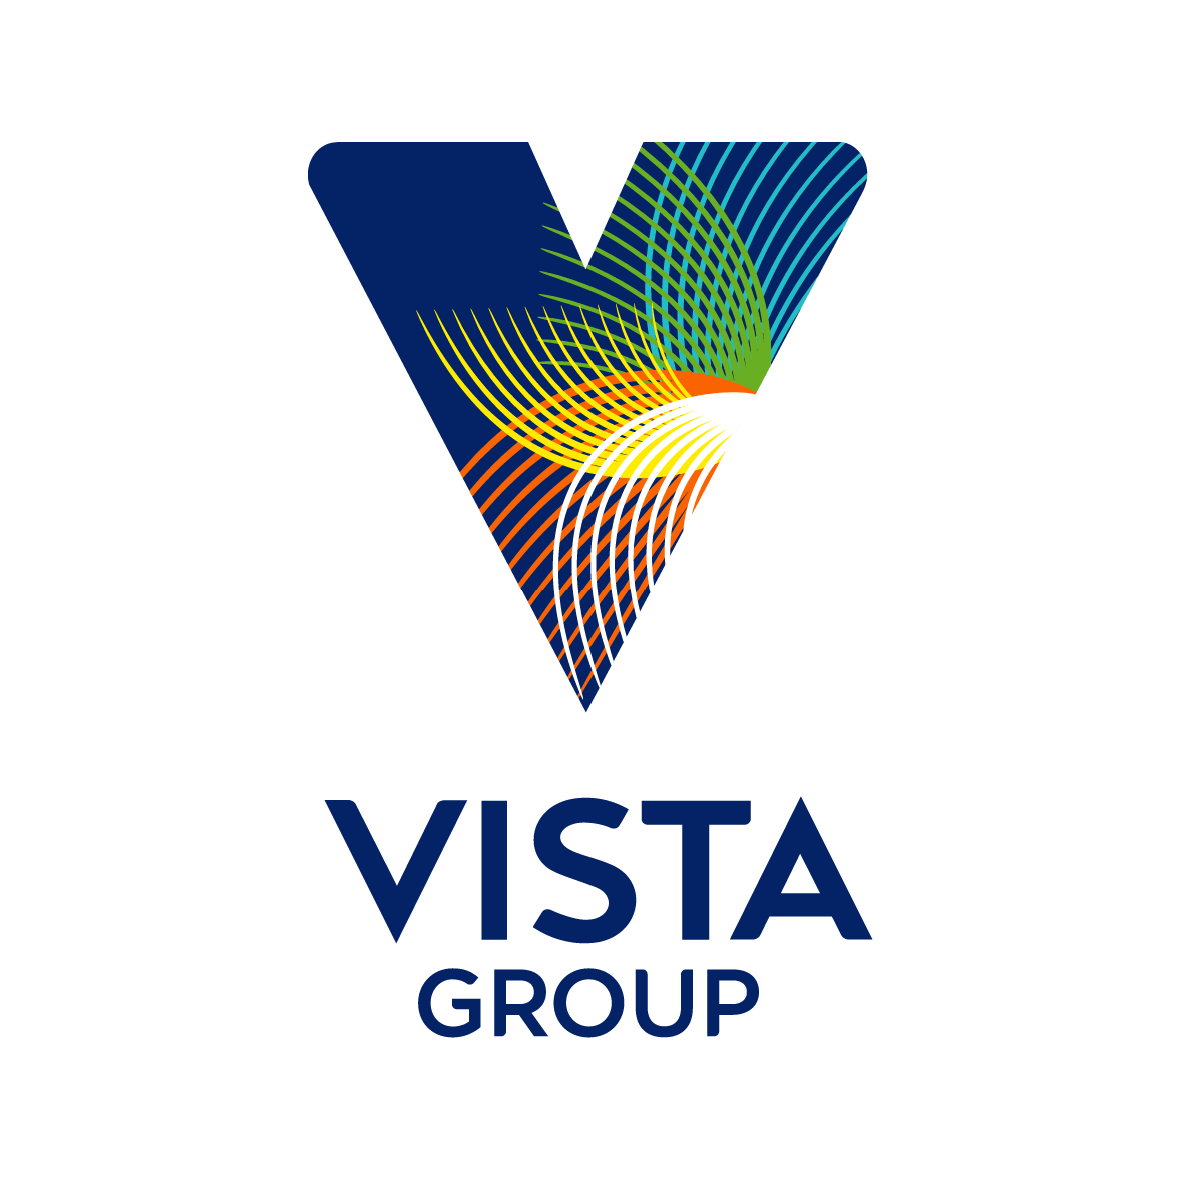 Vista Logo - File:Vista Group Logo Portrait 300dpi.png - Wikimedia Commons